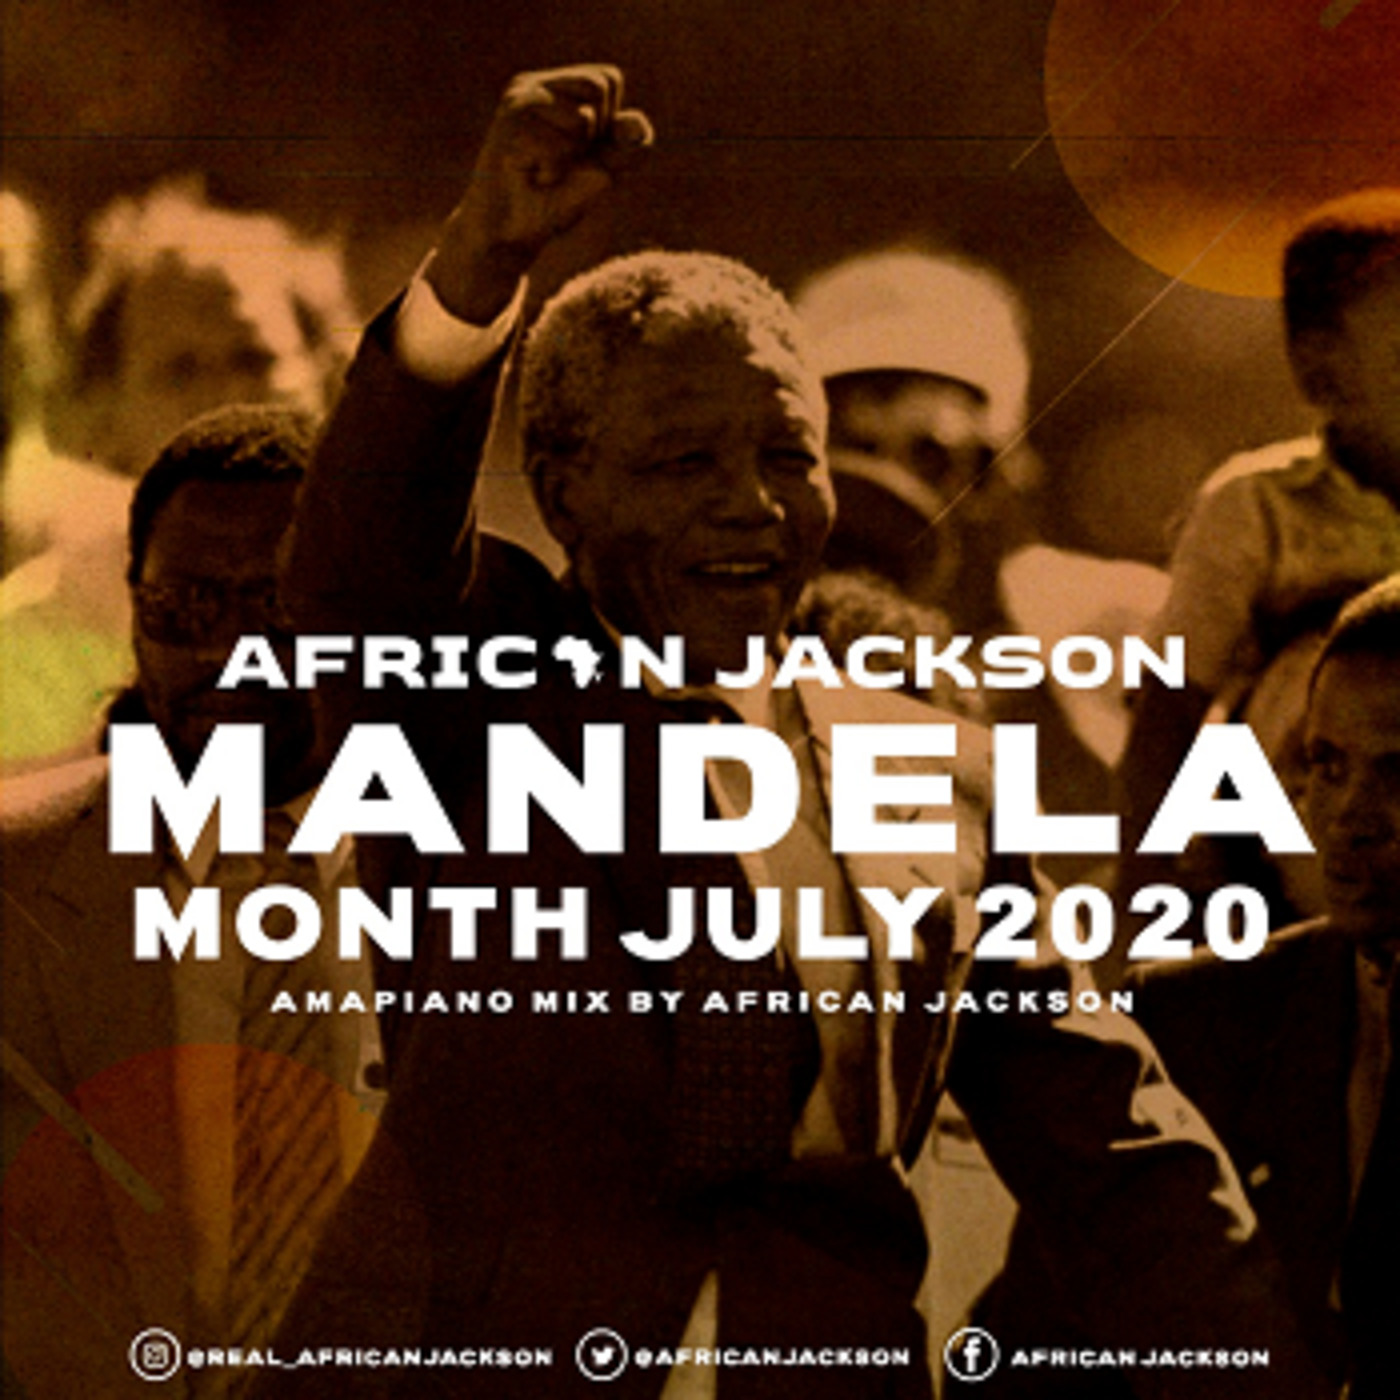 Mandela Month July 2020 Amapiano Mix By African Jackson